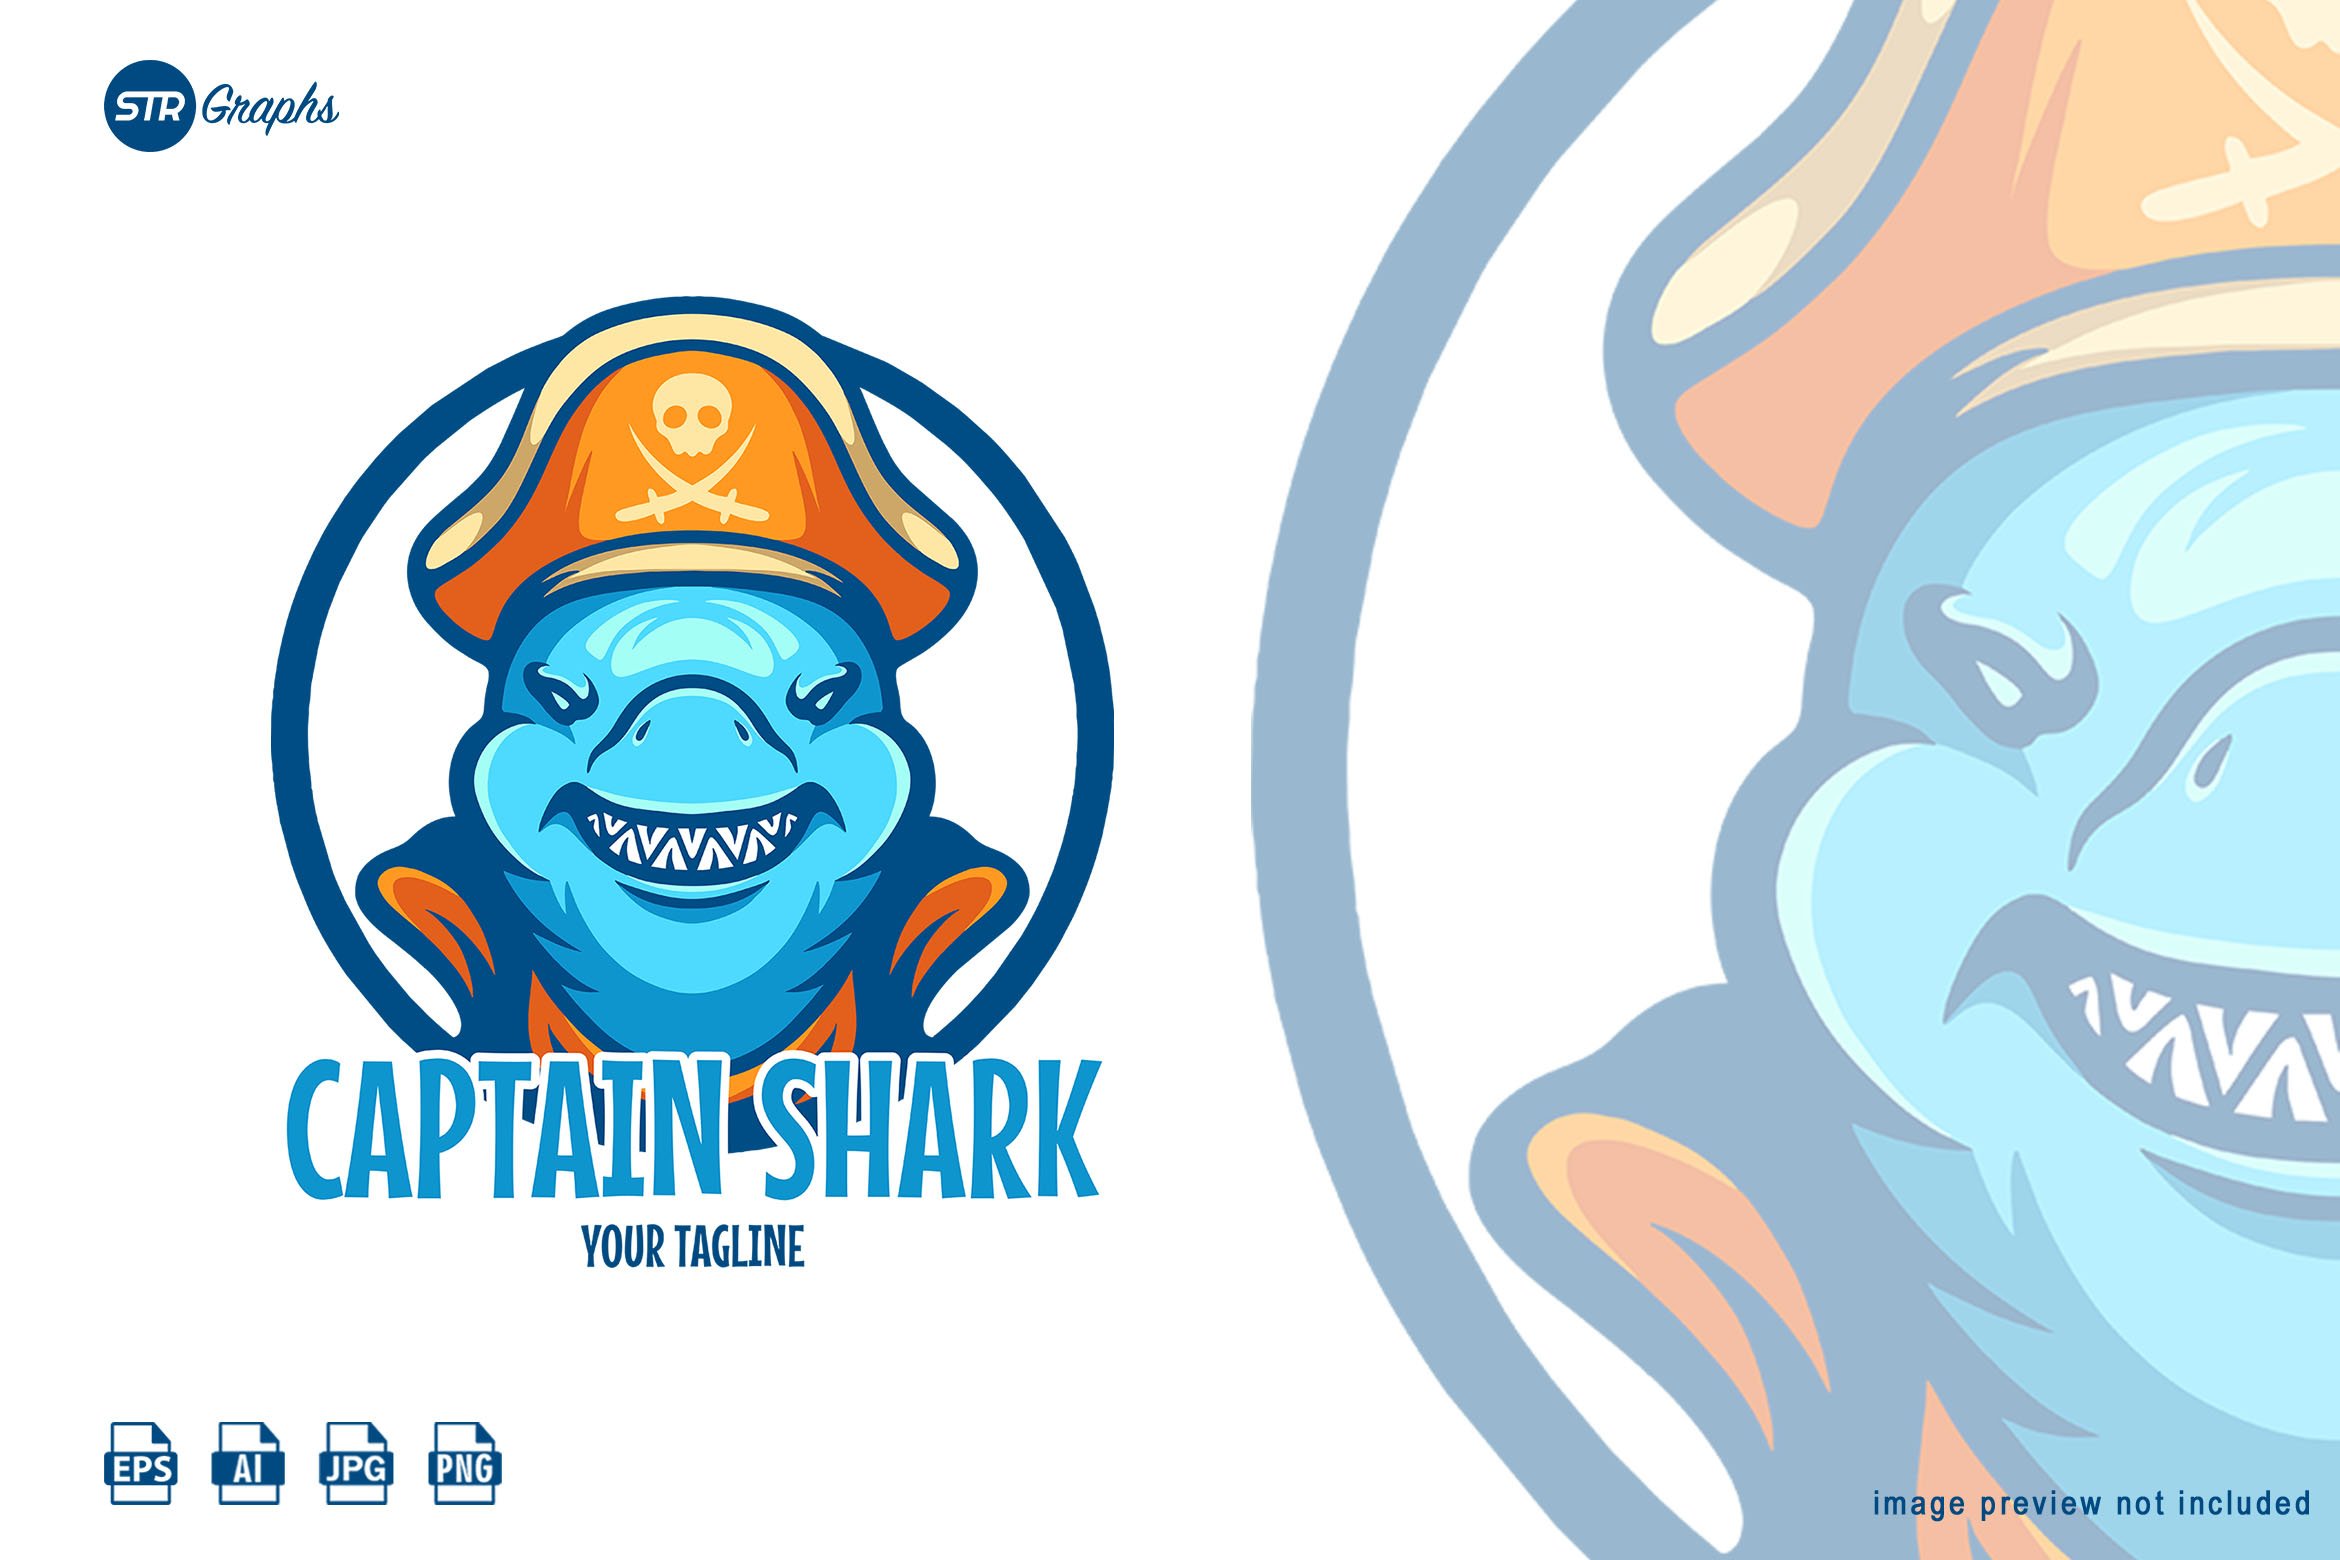 Captain Shark - Character Logo cover image.